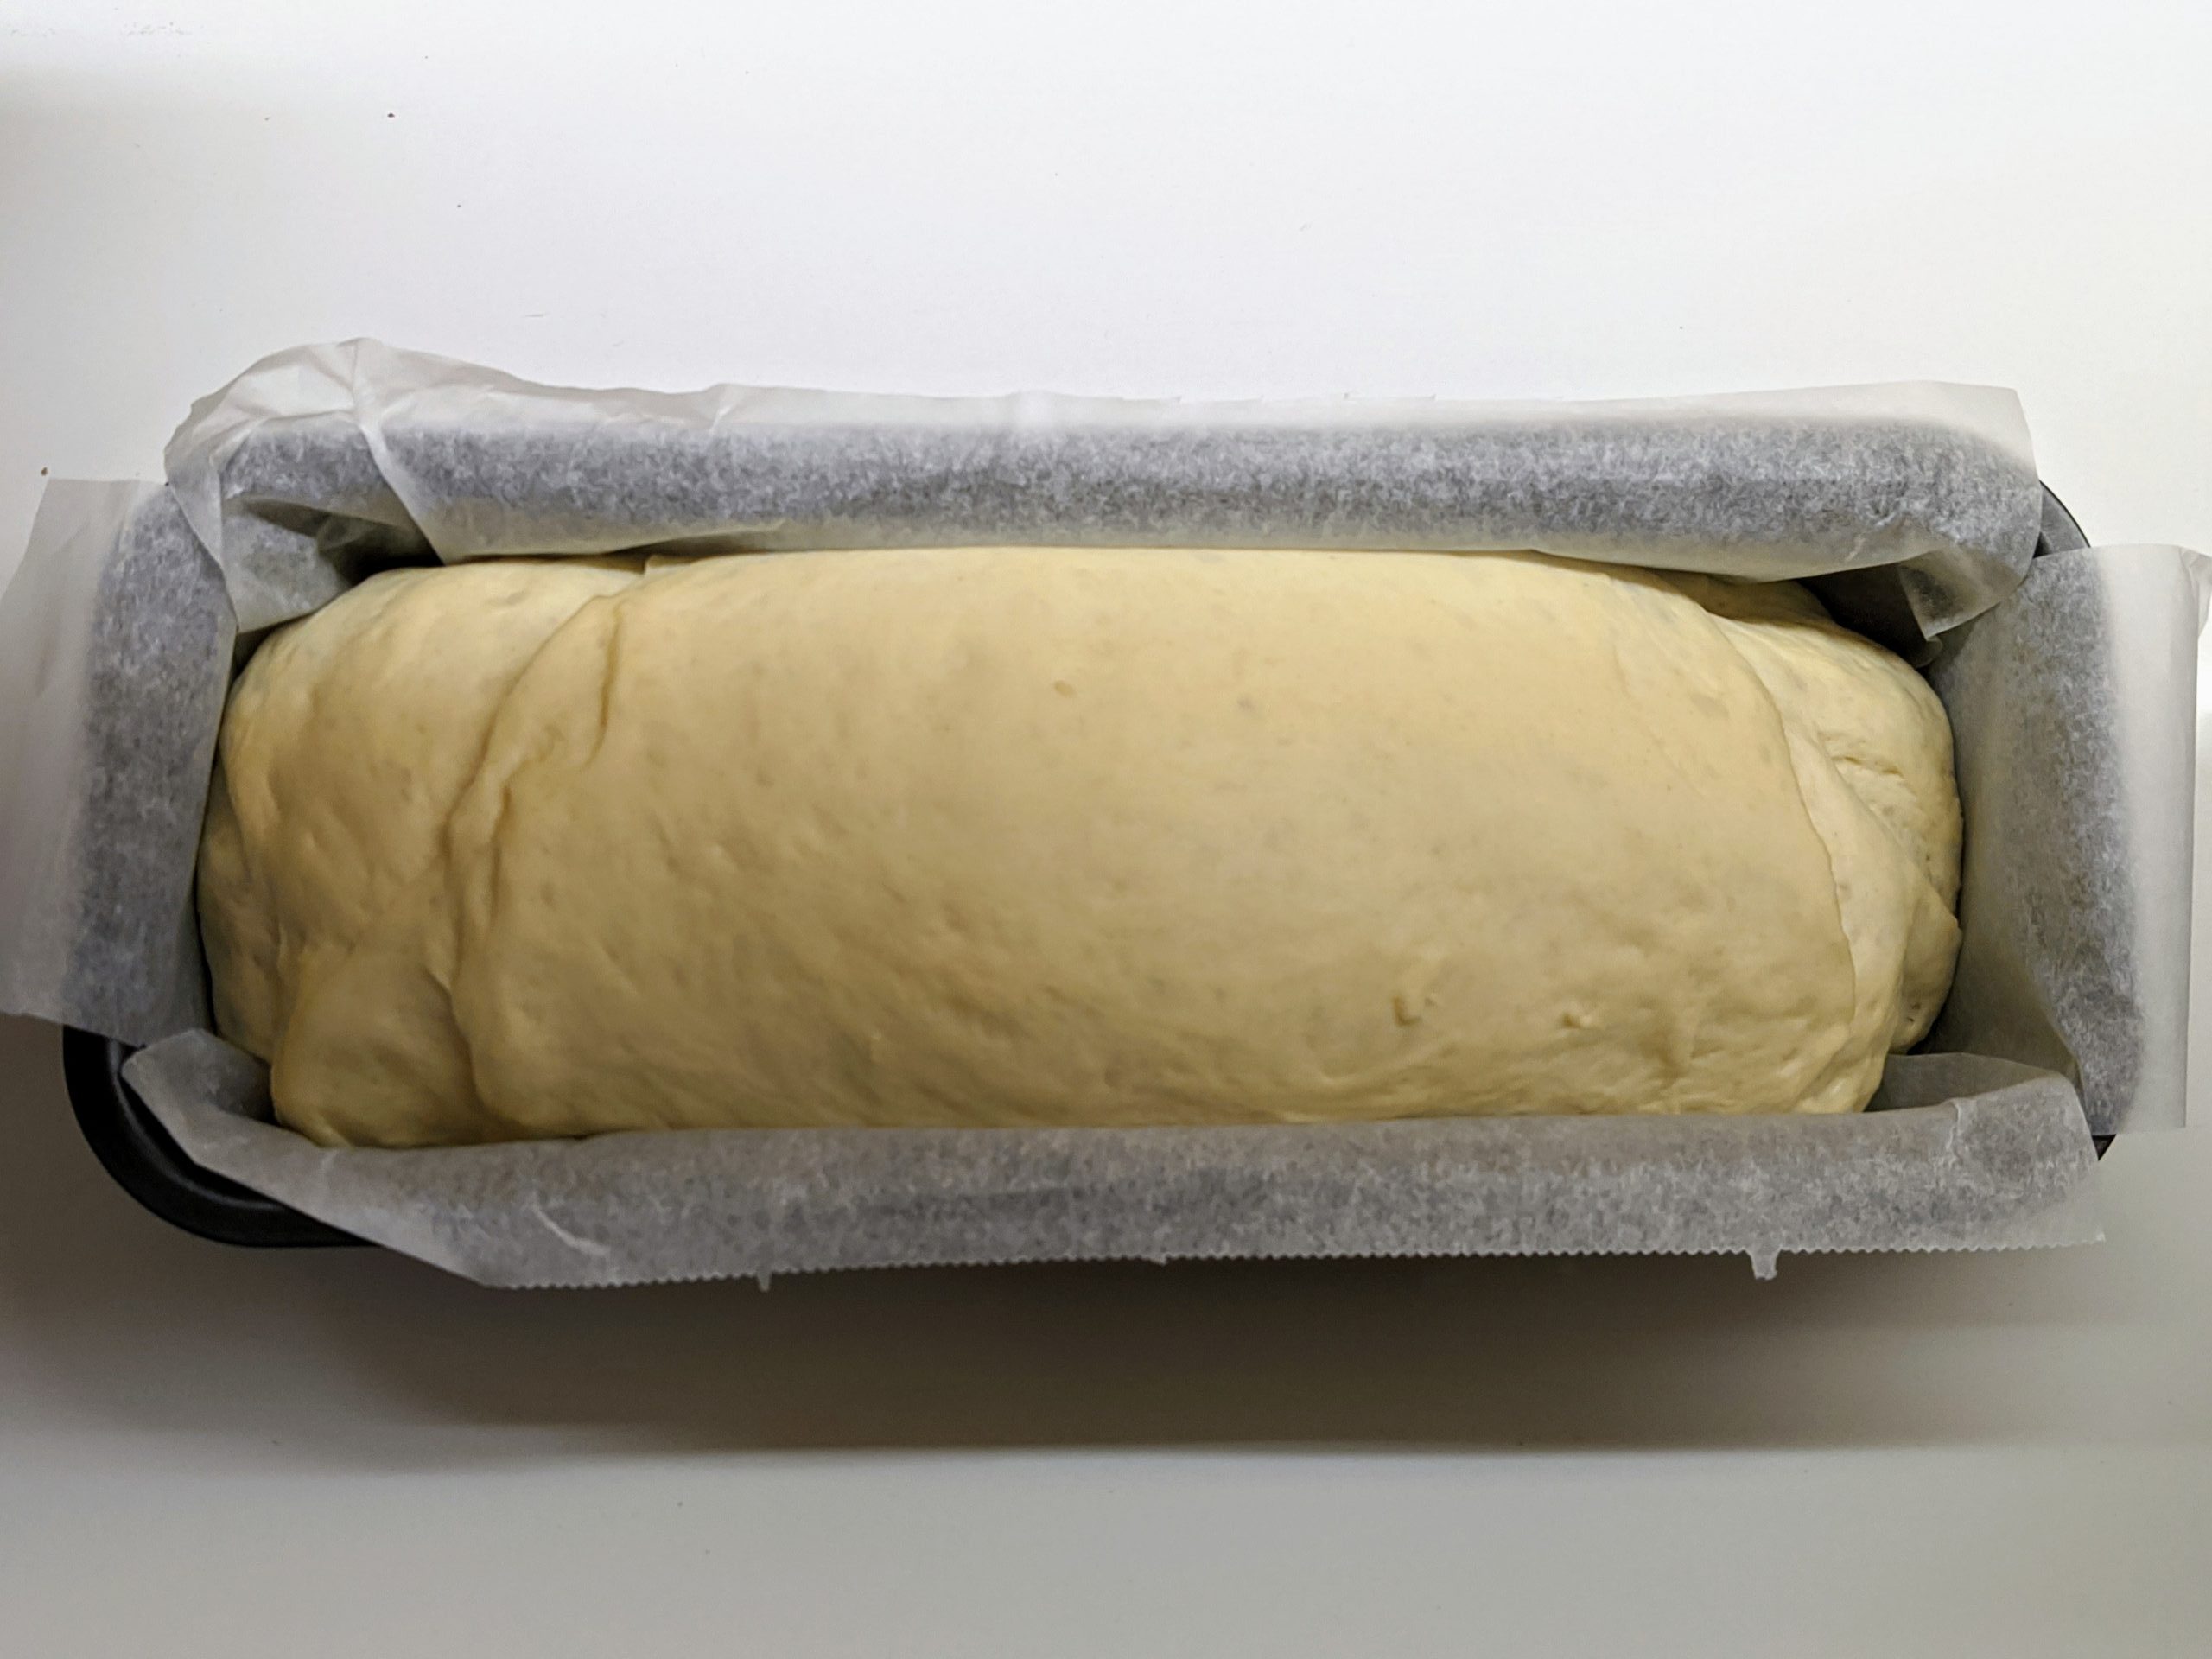 pan de molde fermentado